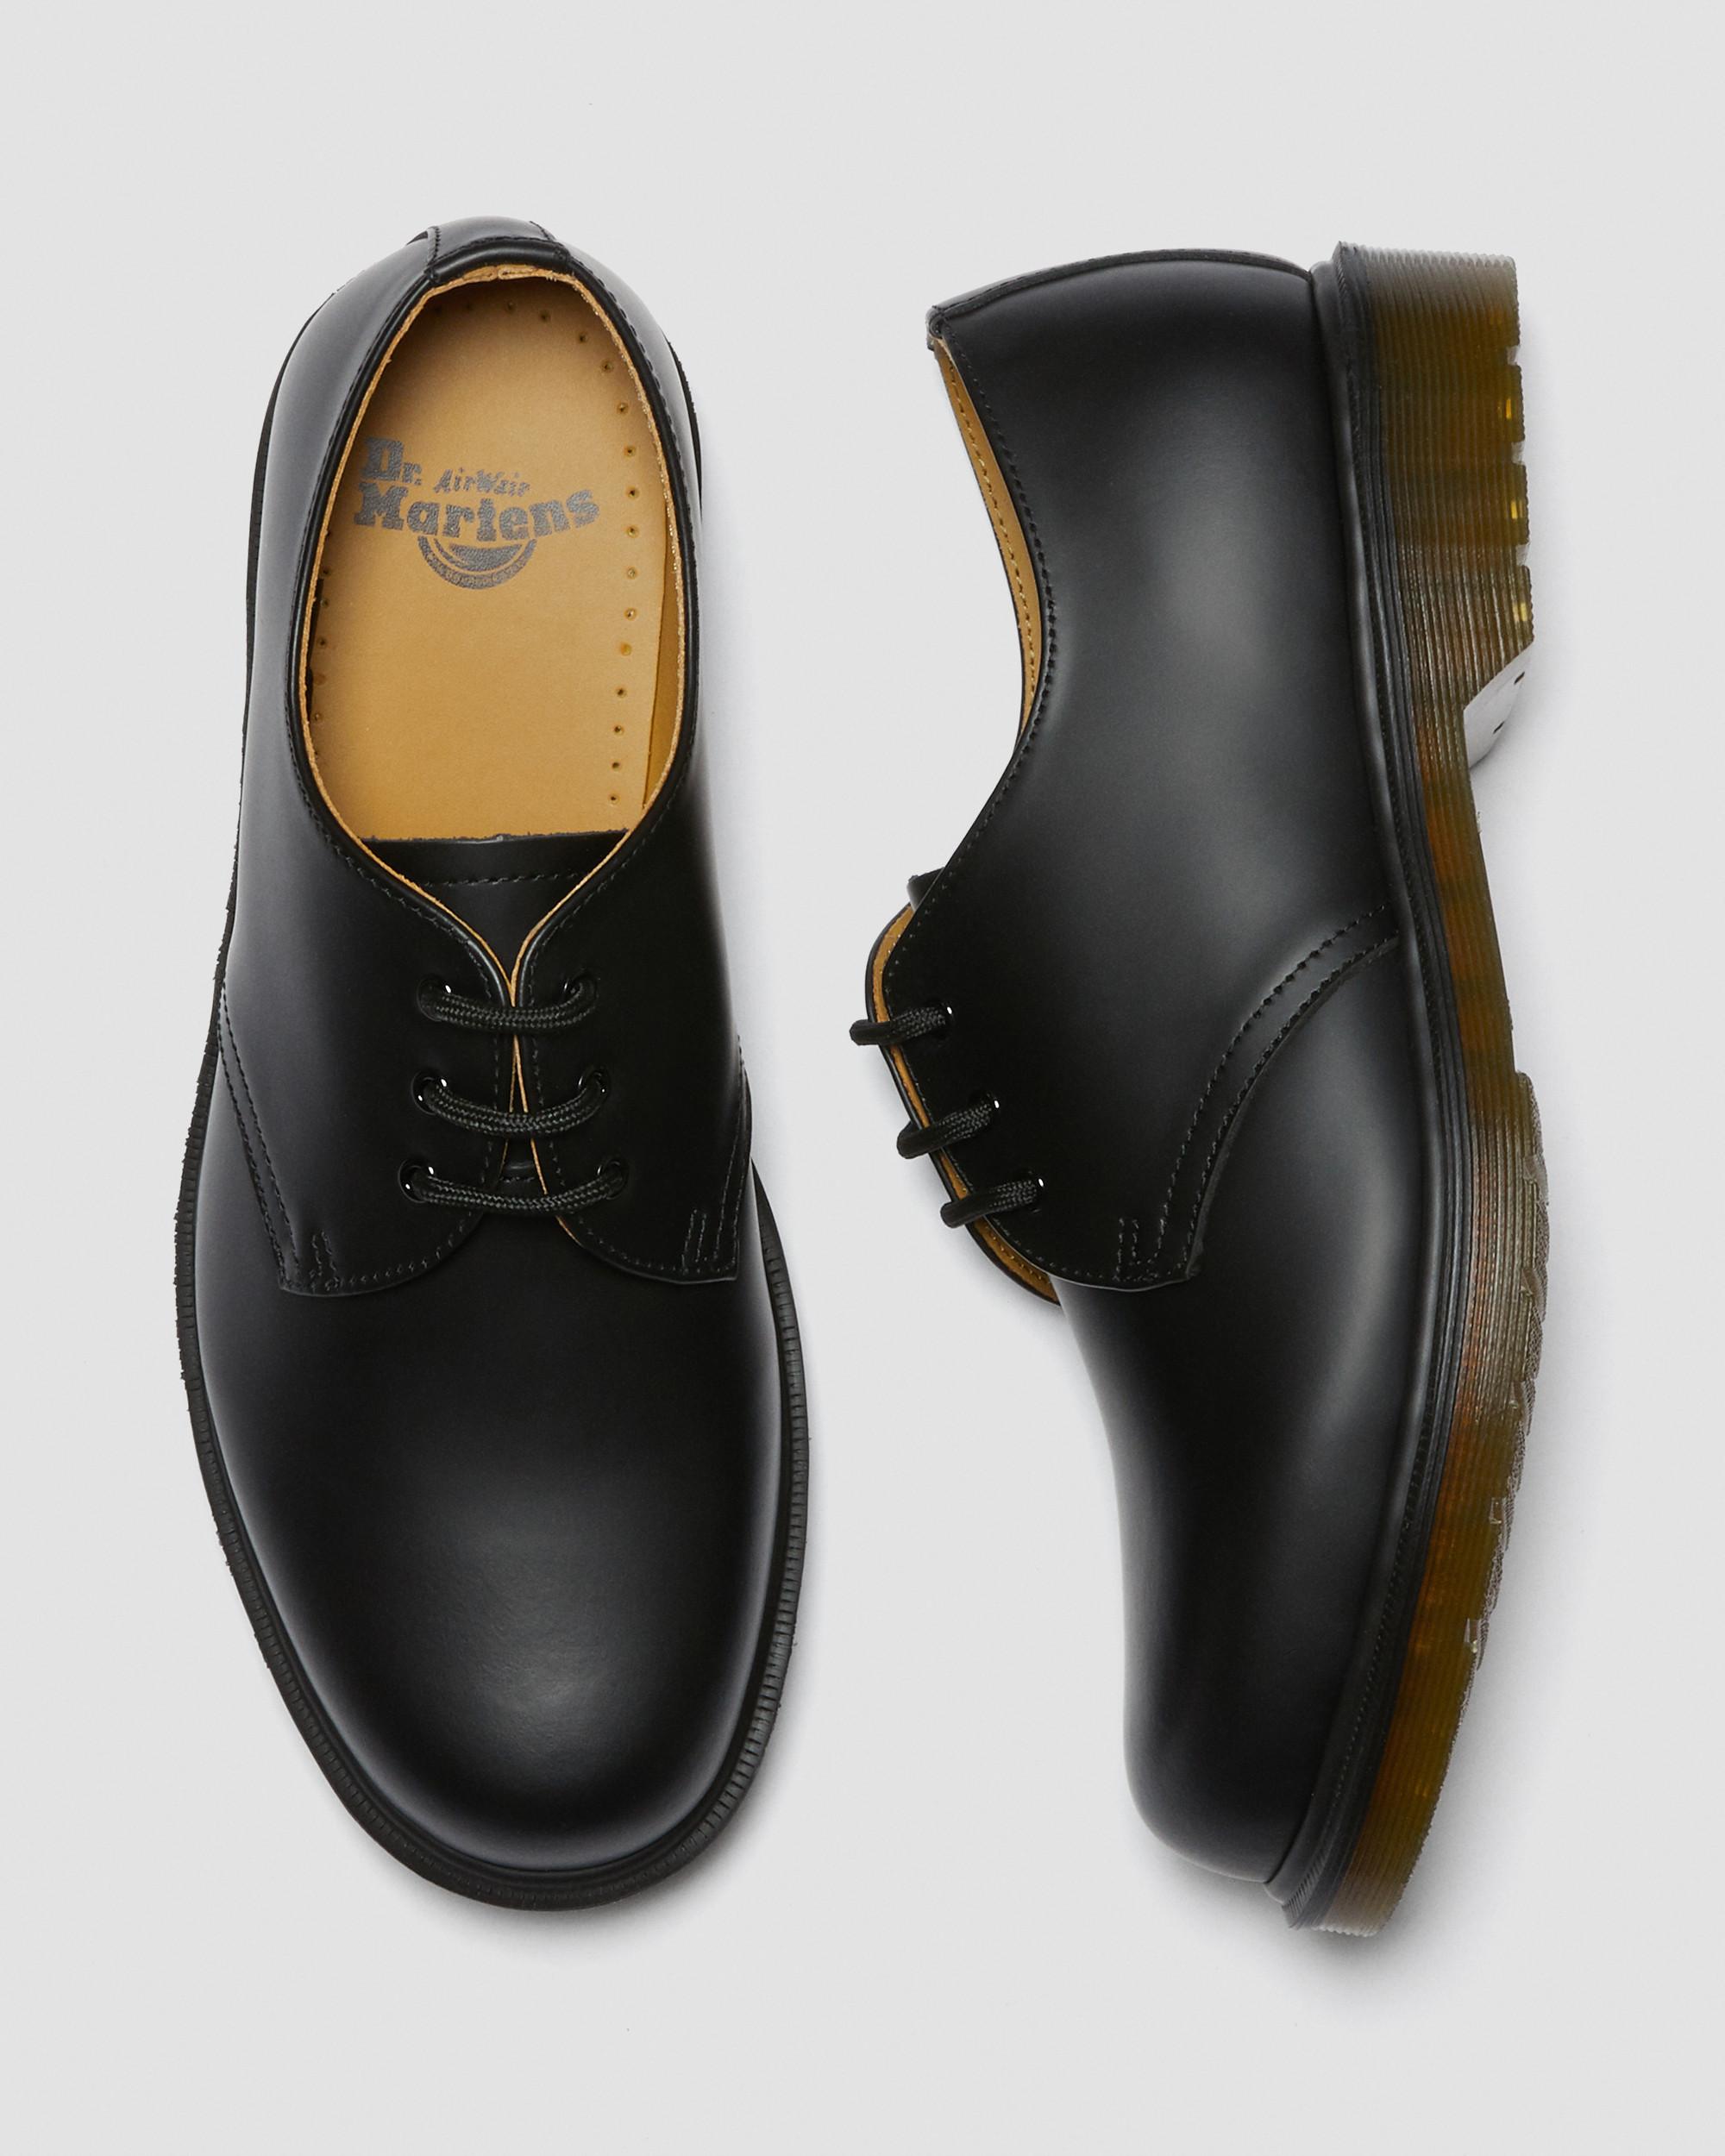 1461 Plain Welt Smooth Leather Oxford Shoes1461 Plain Welt Smooth Leather Oxford Shoes Dr. Martens